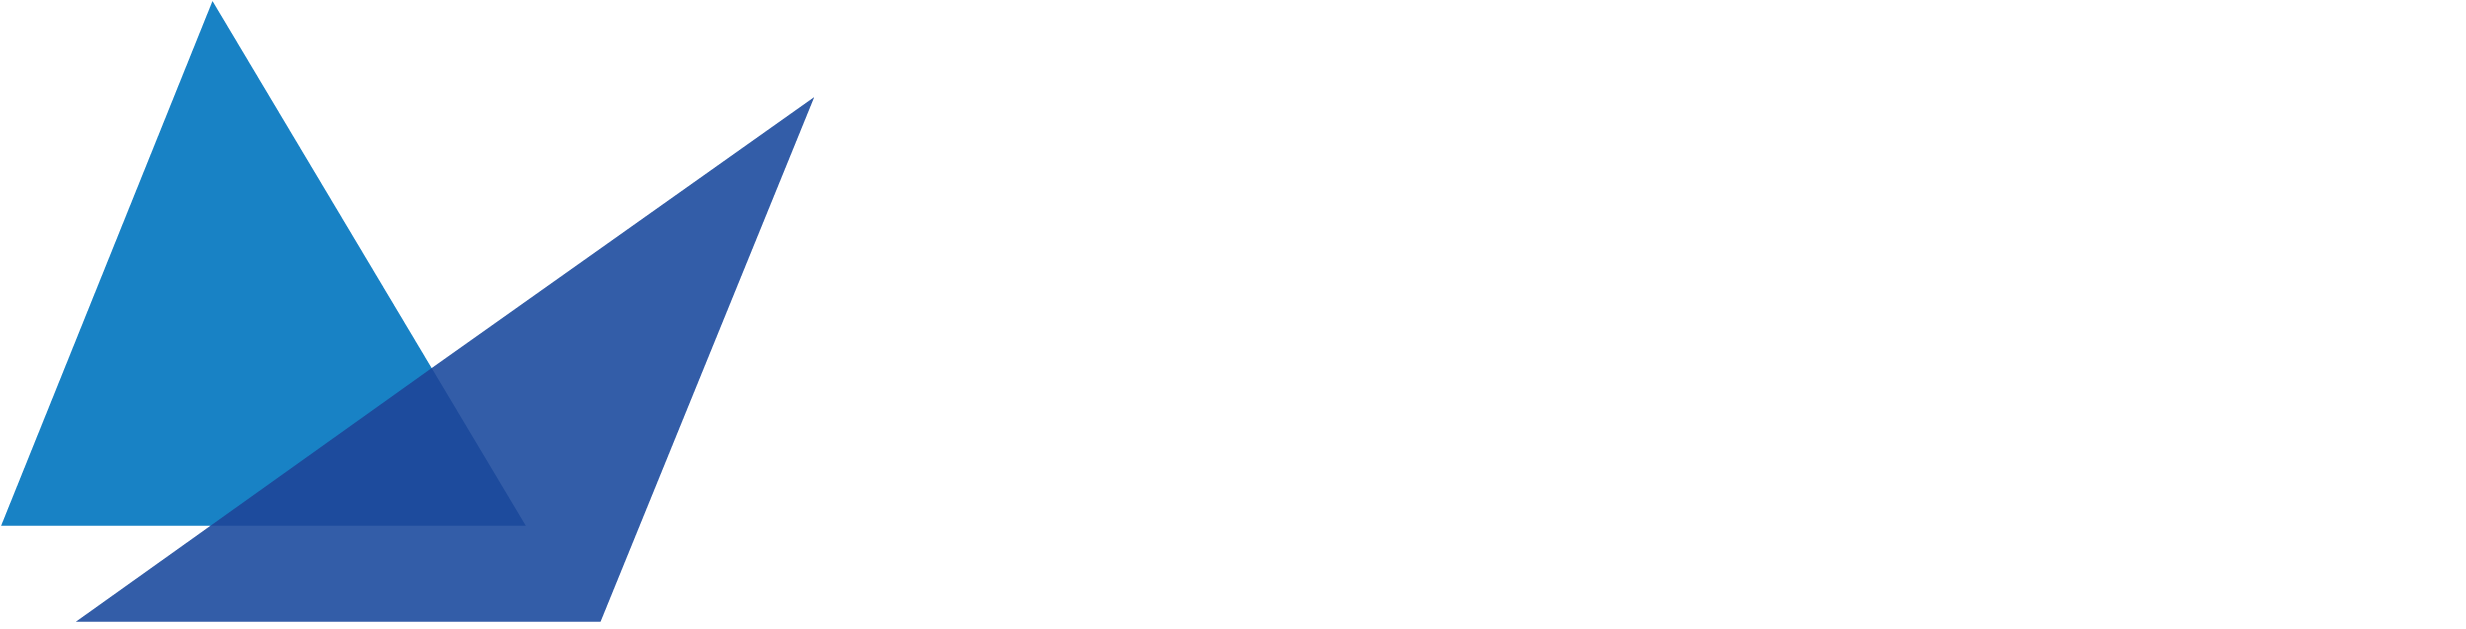 Rem Constructions Services - Graphic Design (2570x734), Png Download